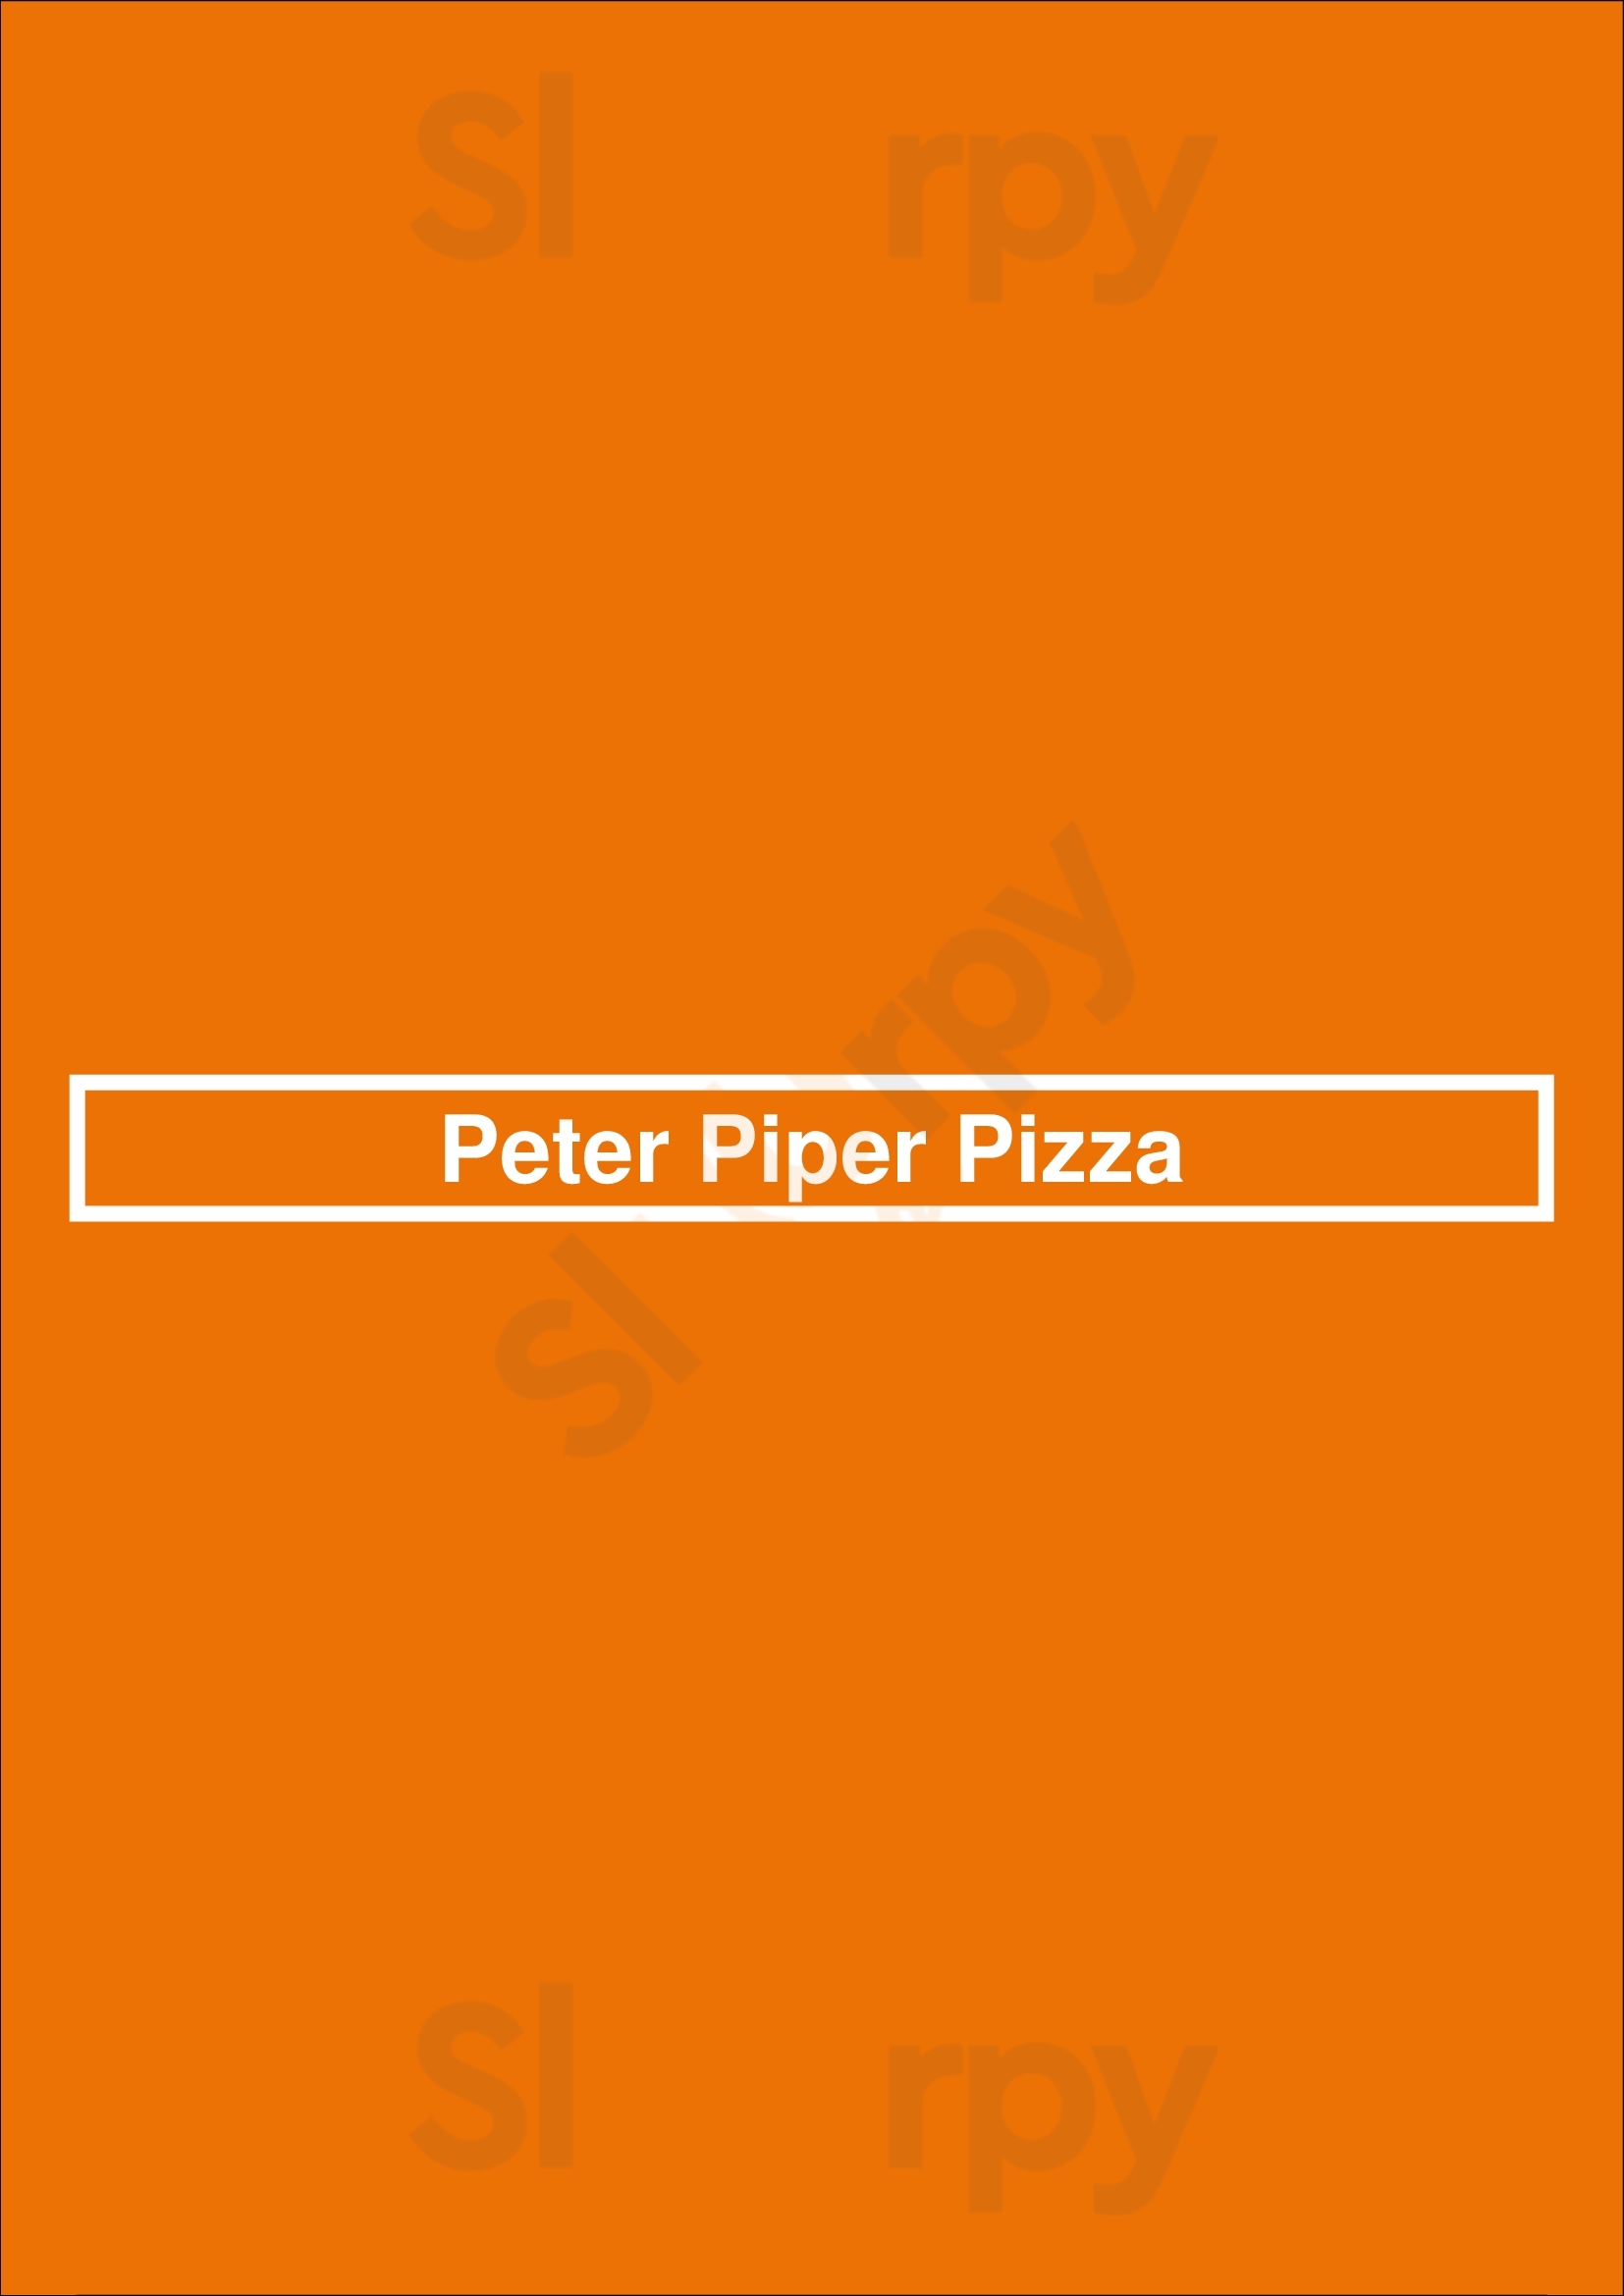 Peter Piper Pizza Las Vegas Menu - 1